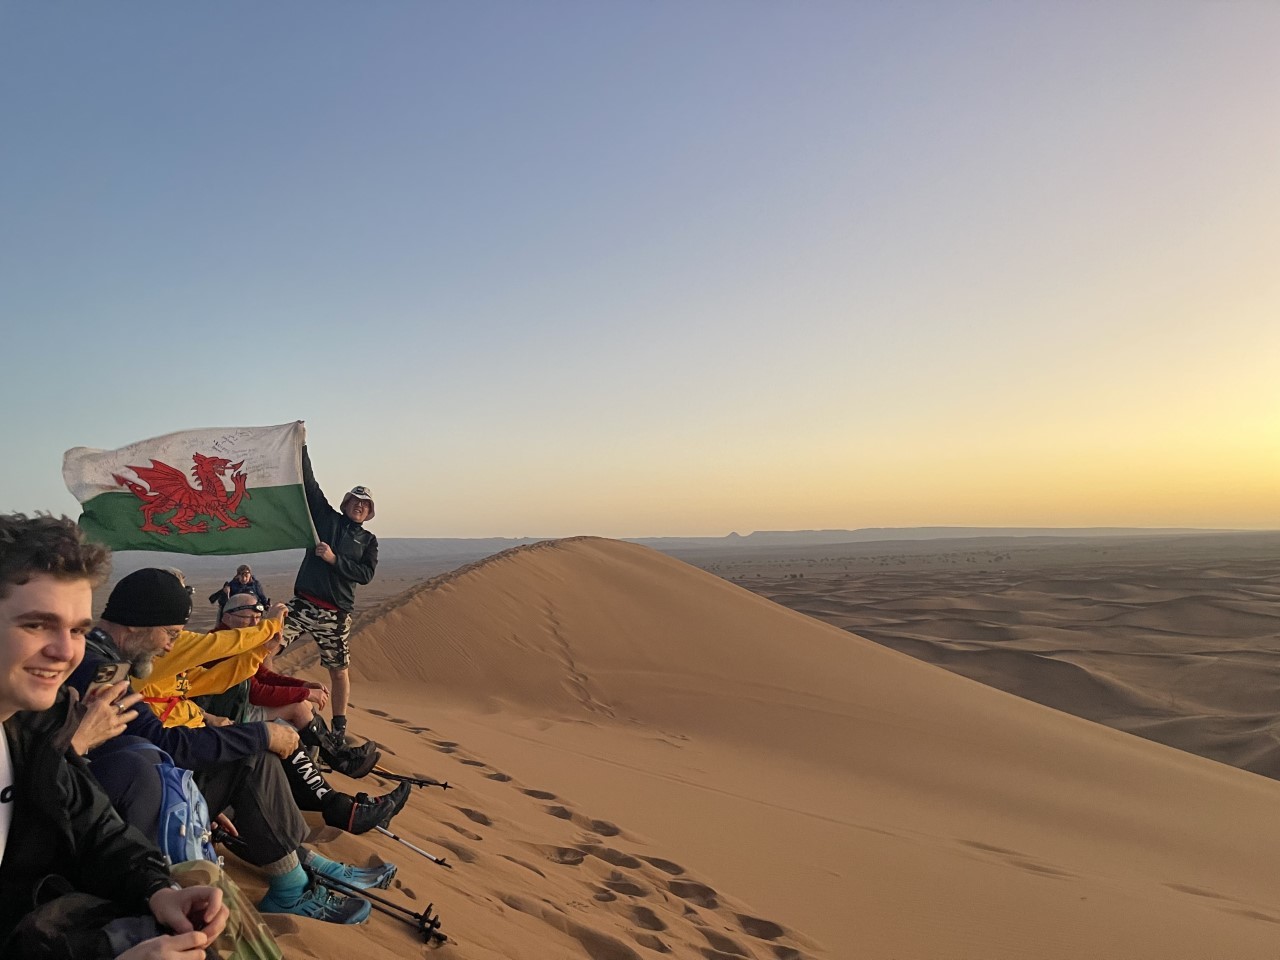 Flying the Welsh flag in the Sahara